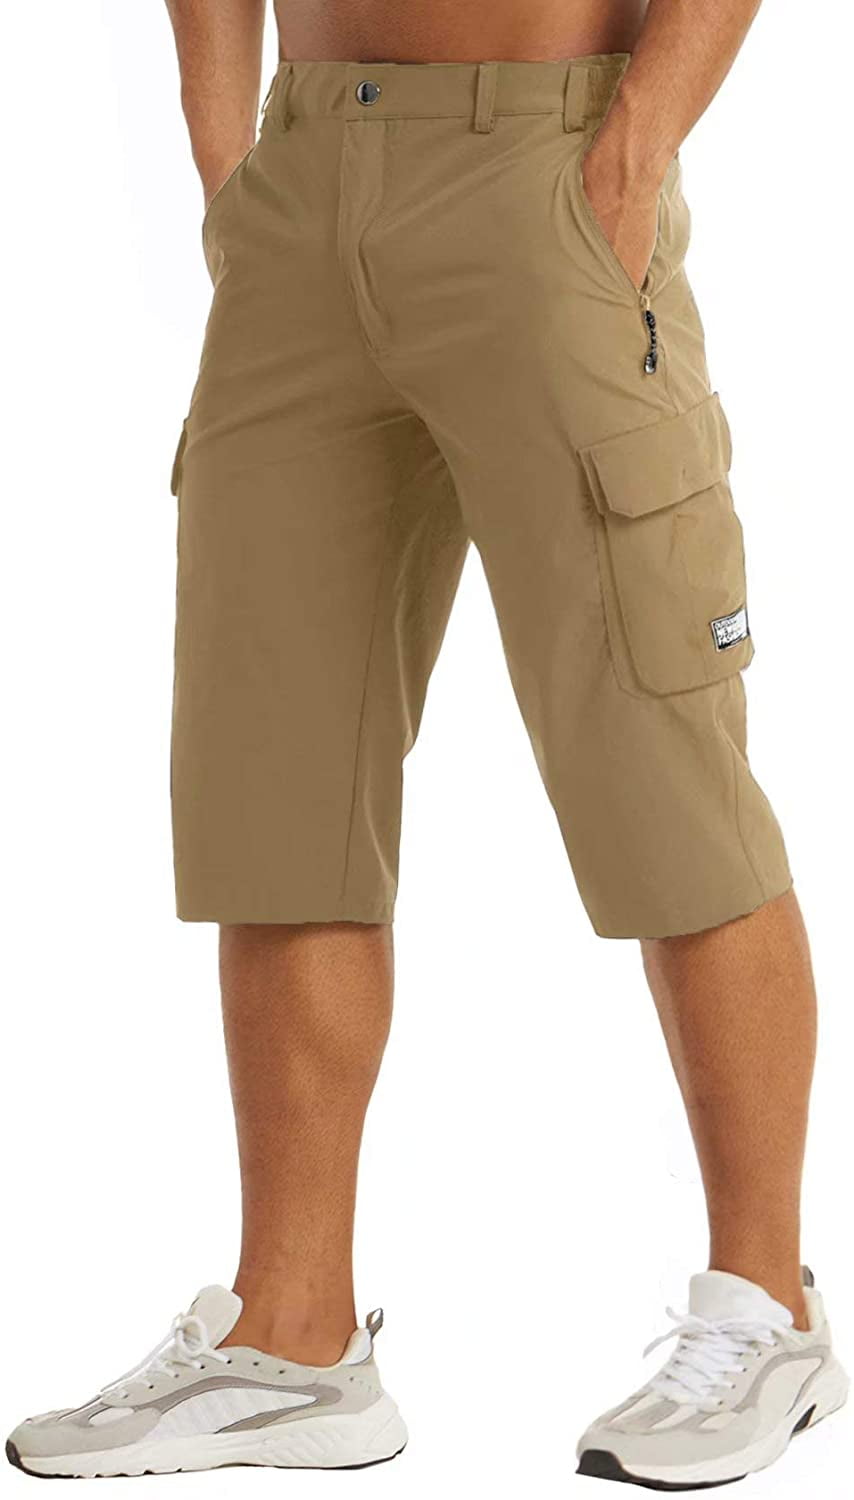 MAGCOMSEN Men's Workout Gym Hiking Shorts Quick Dry 3/4 Capri Pants Zipper Pockets Athletic Running Shorts 